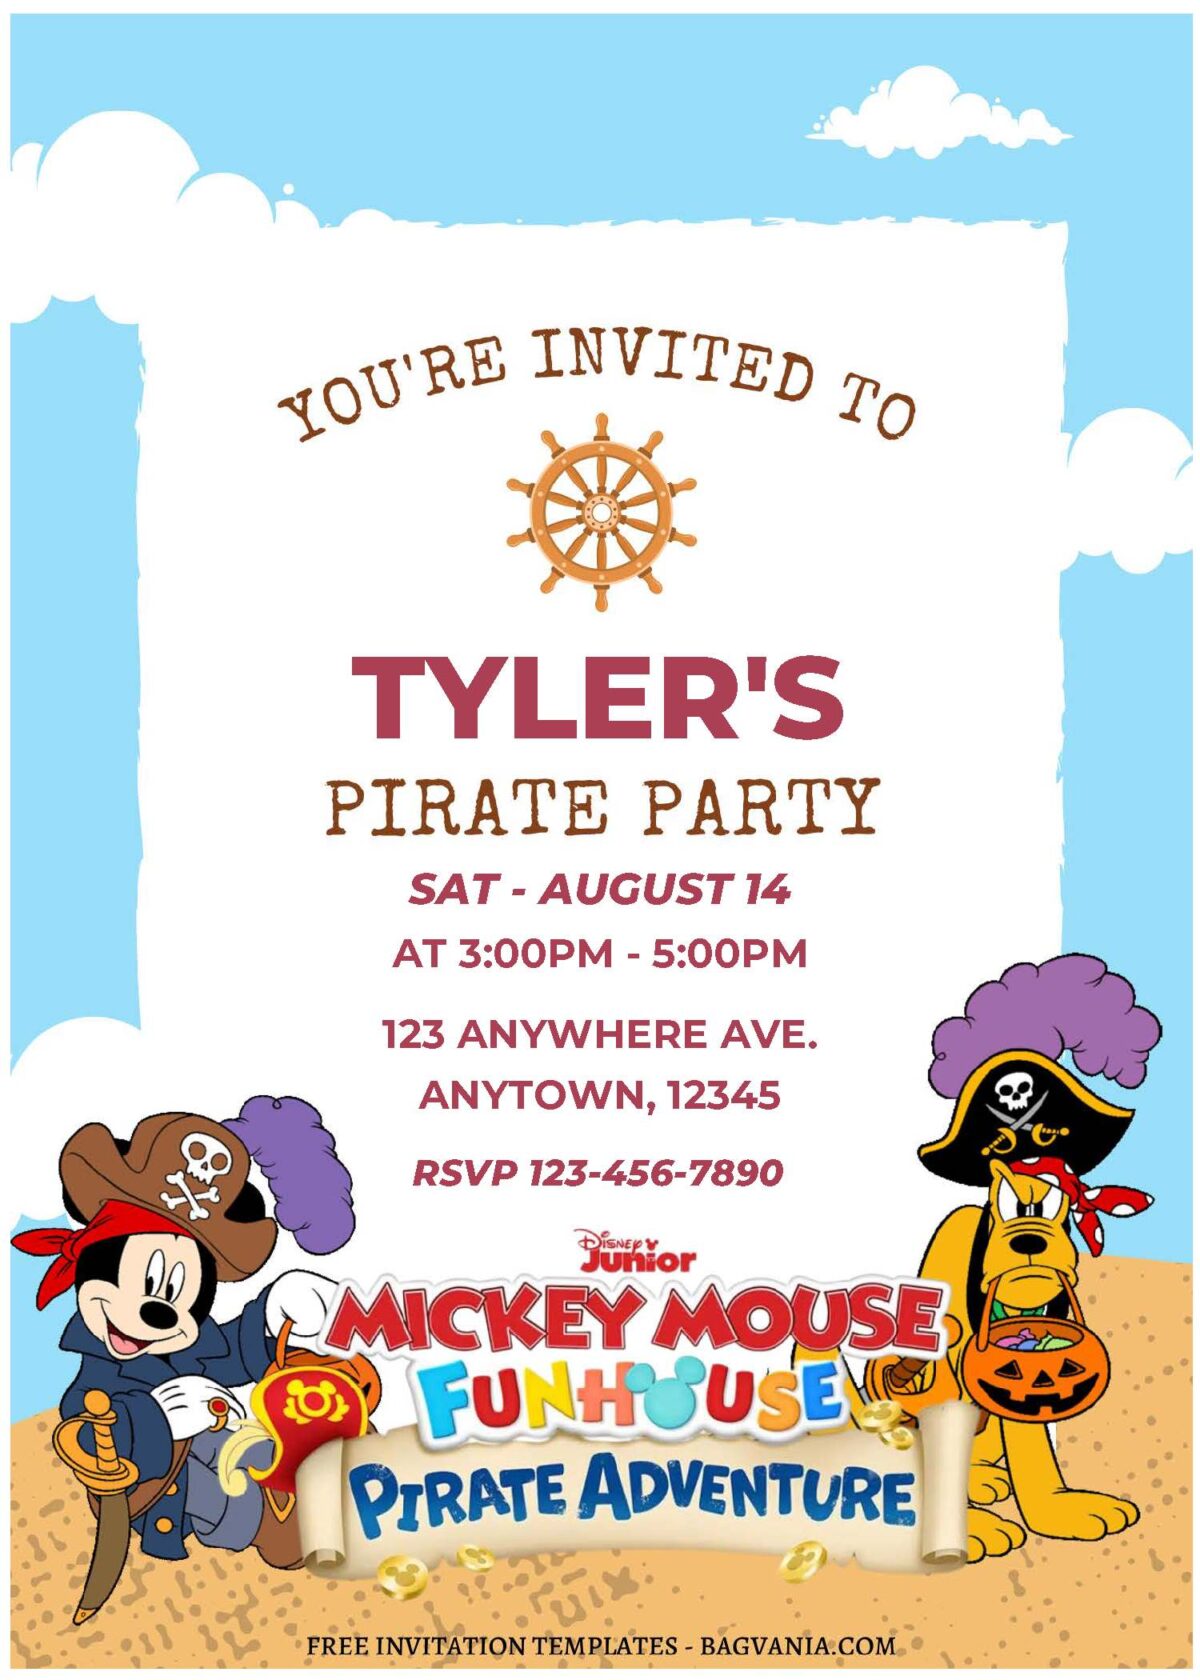 (Free Editable PDF) Super Cute Mickey Mouse Pirate Adventure Birthday Invitation Templates A